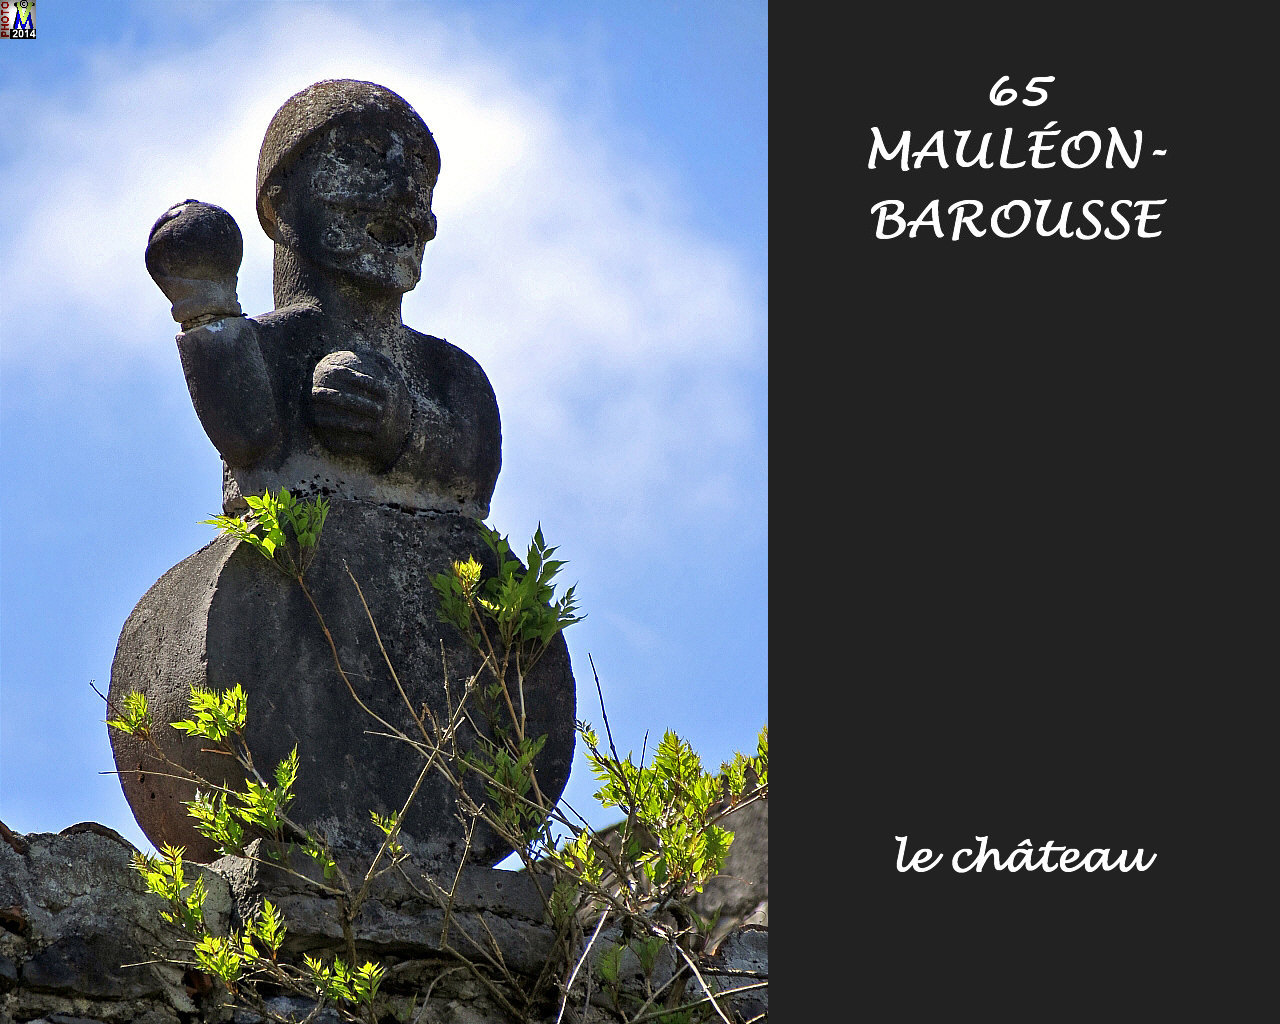 65MAULEON-BAROUSSE_chateau_106.jpg